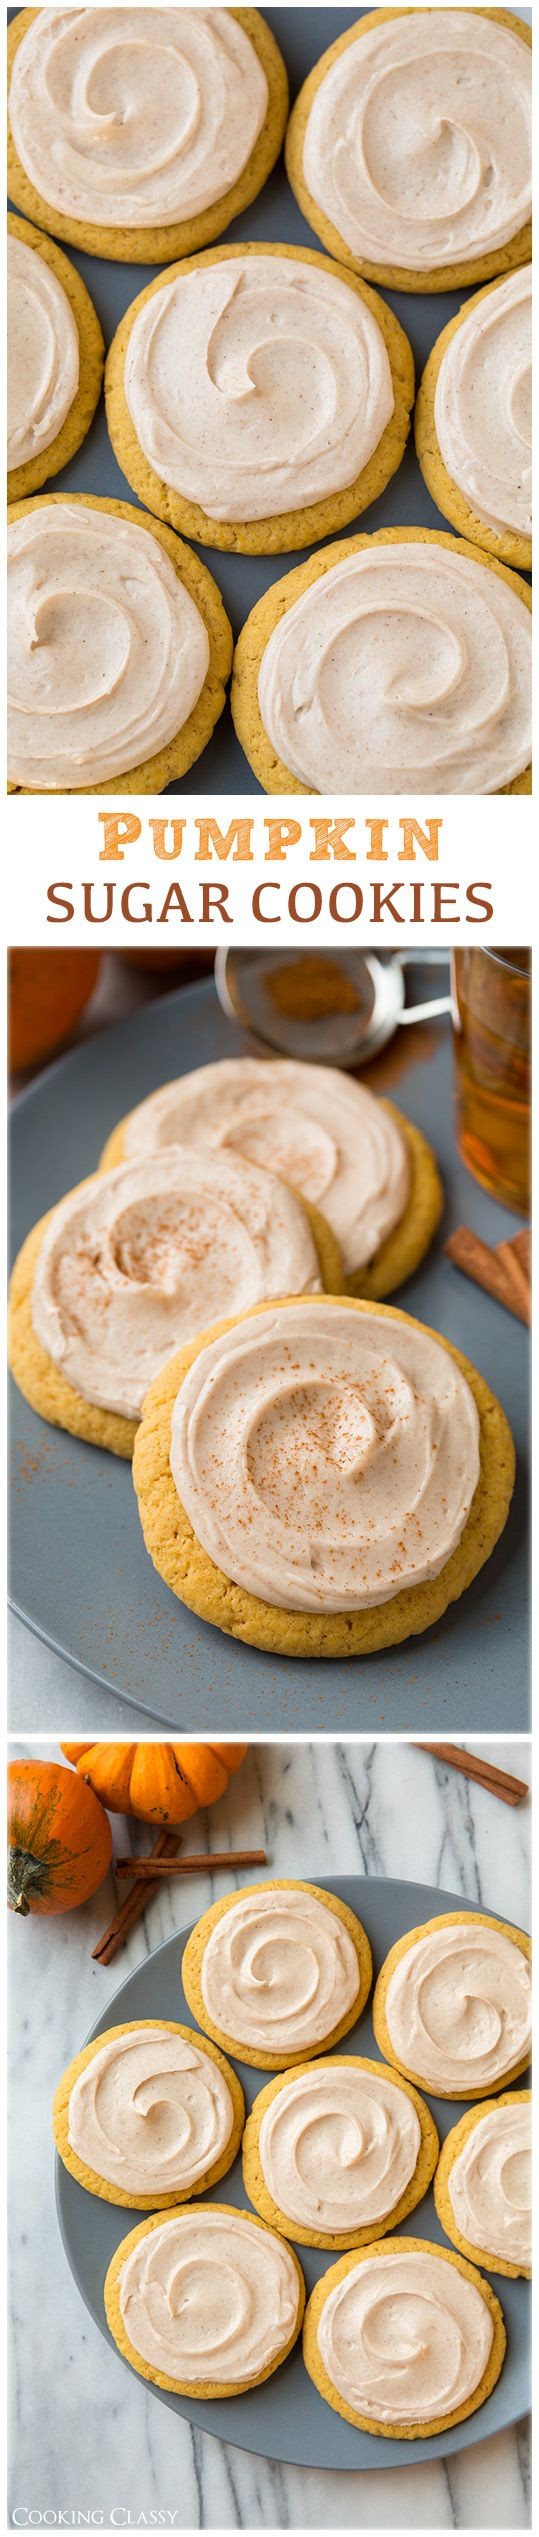 Pumpkin Sugar Cookies with Cinnamon Cream Cheese F...